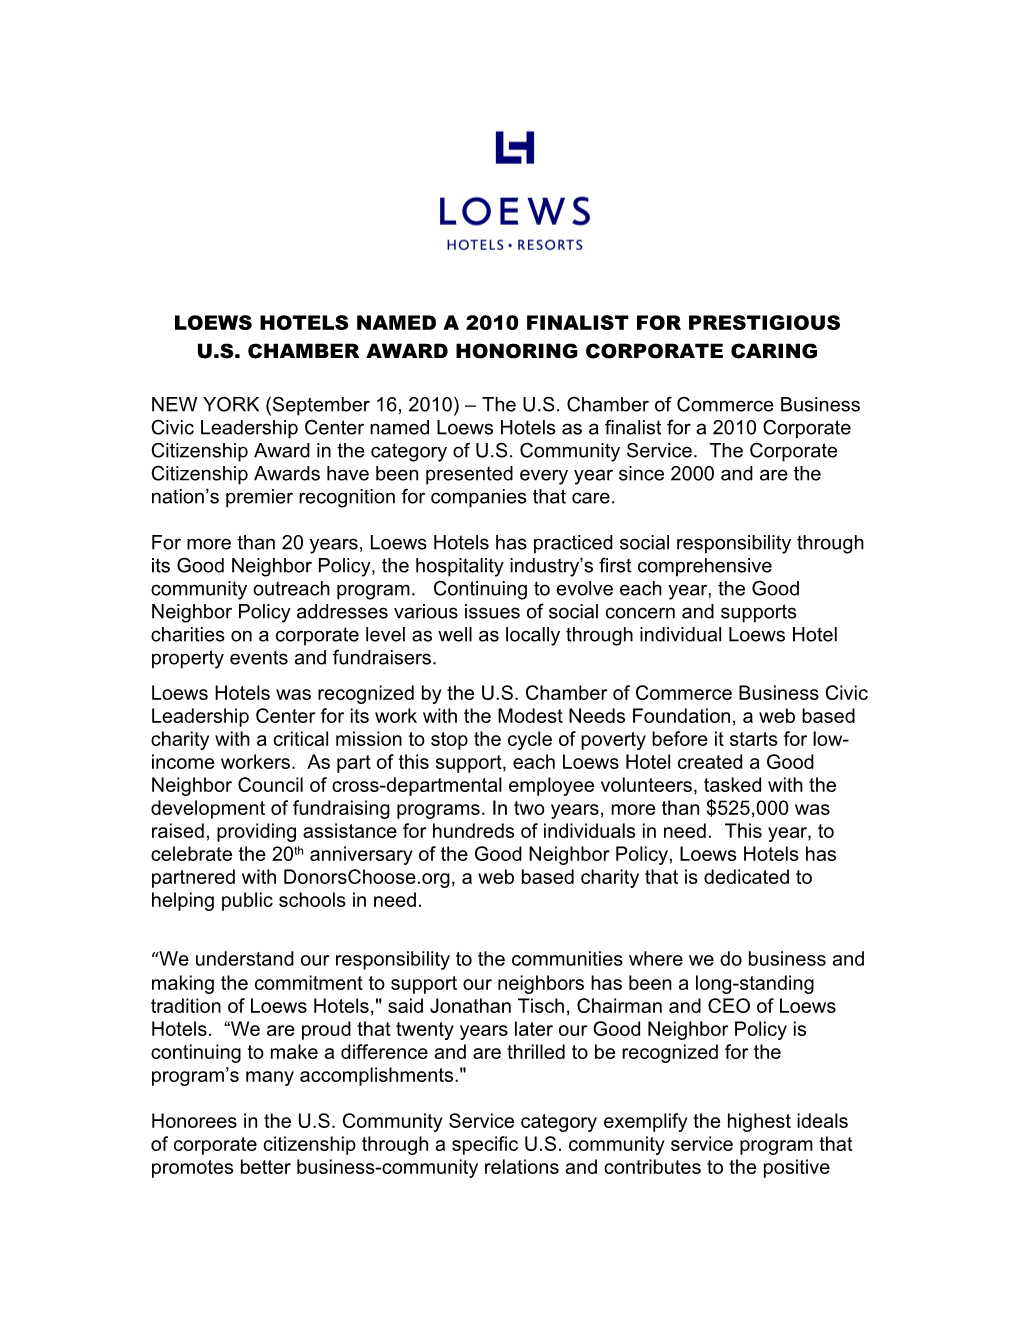 Loews Hotels Named a 2010 Finalist for Prestigious